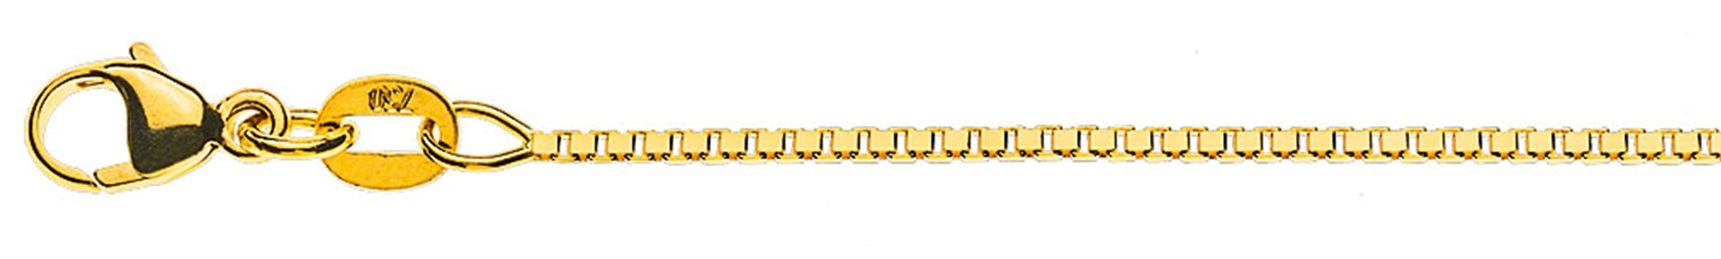 AURONOS Prestige Necklace yellow gold 18K Venetian chain diamond 40cm 1.1mm